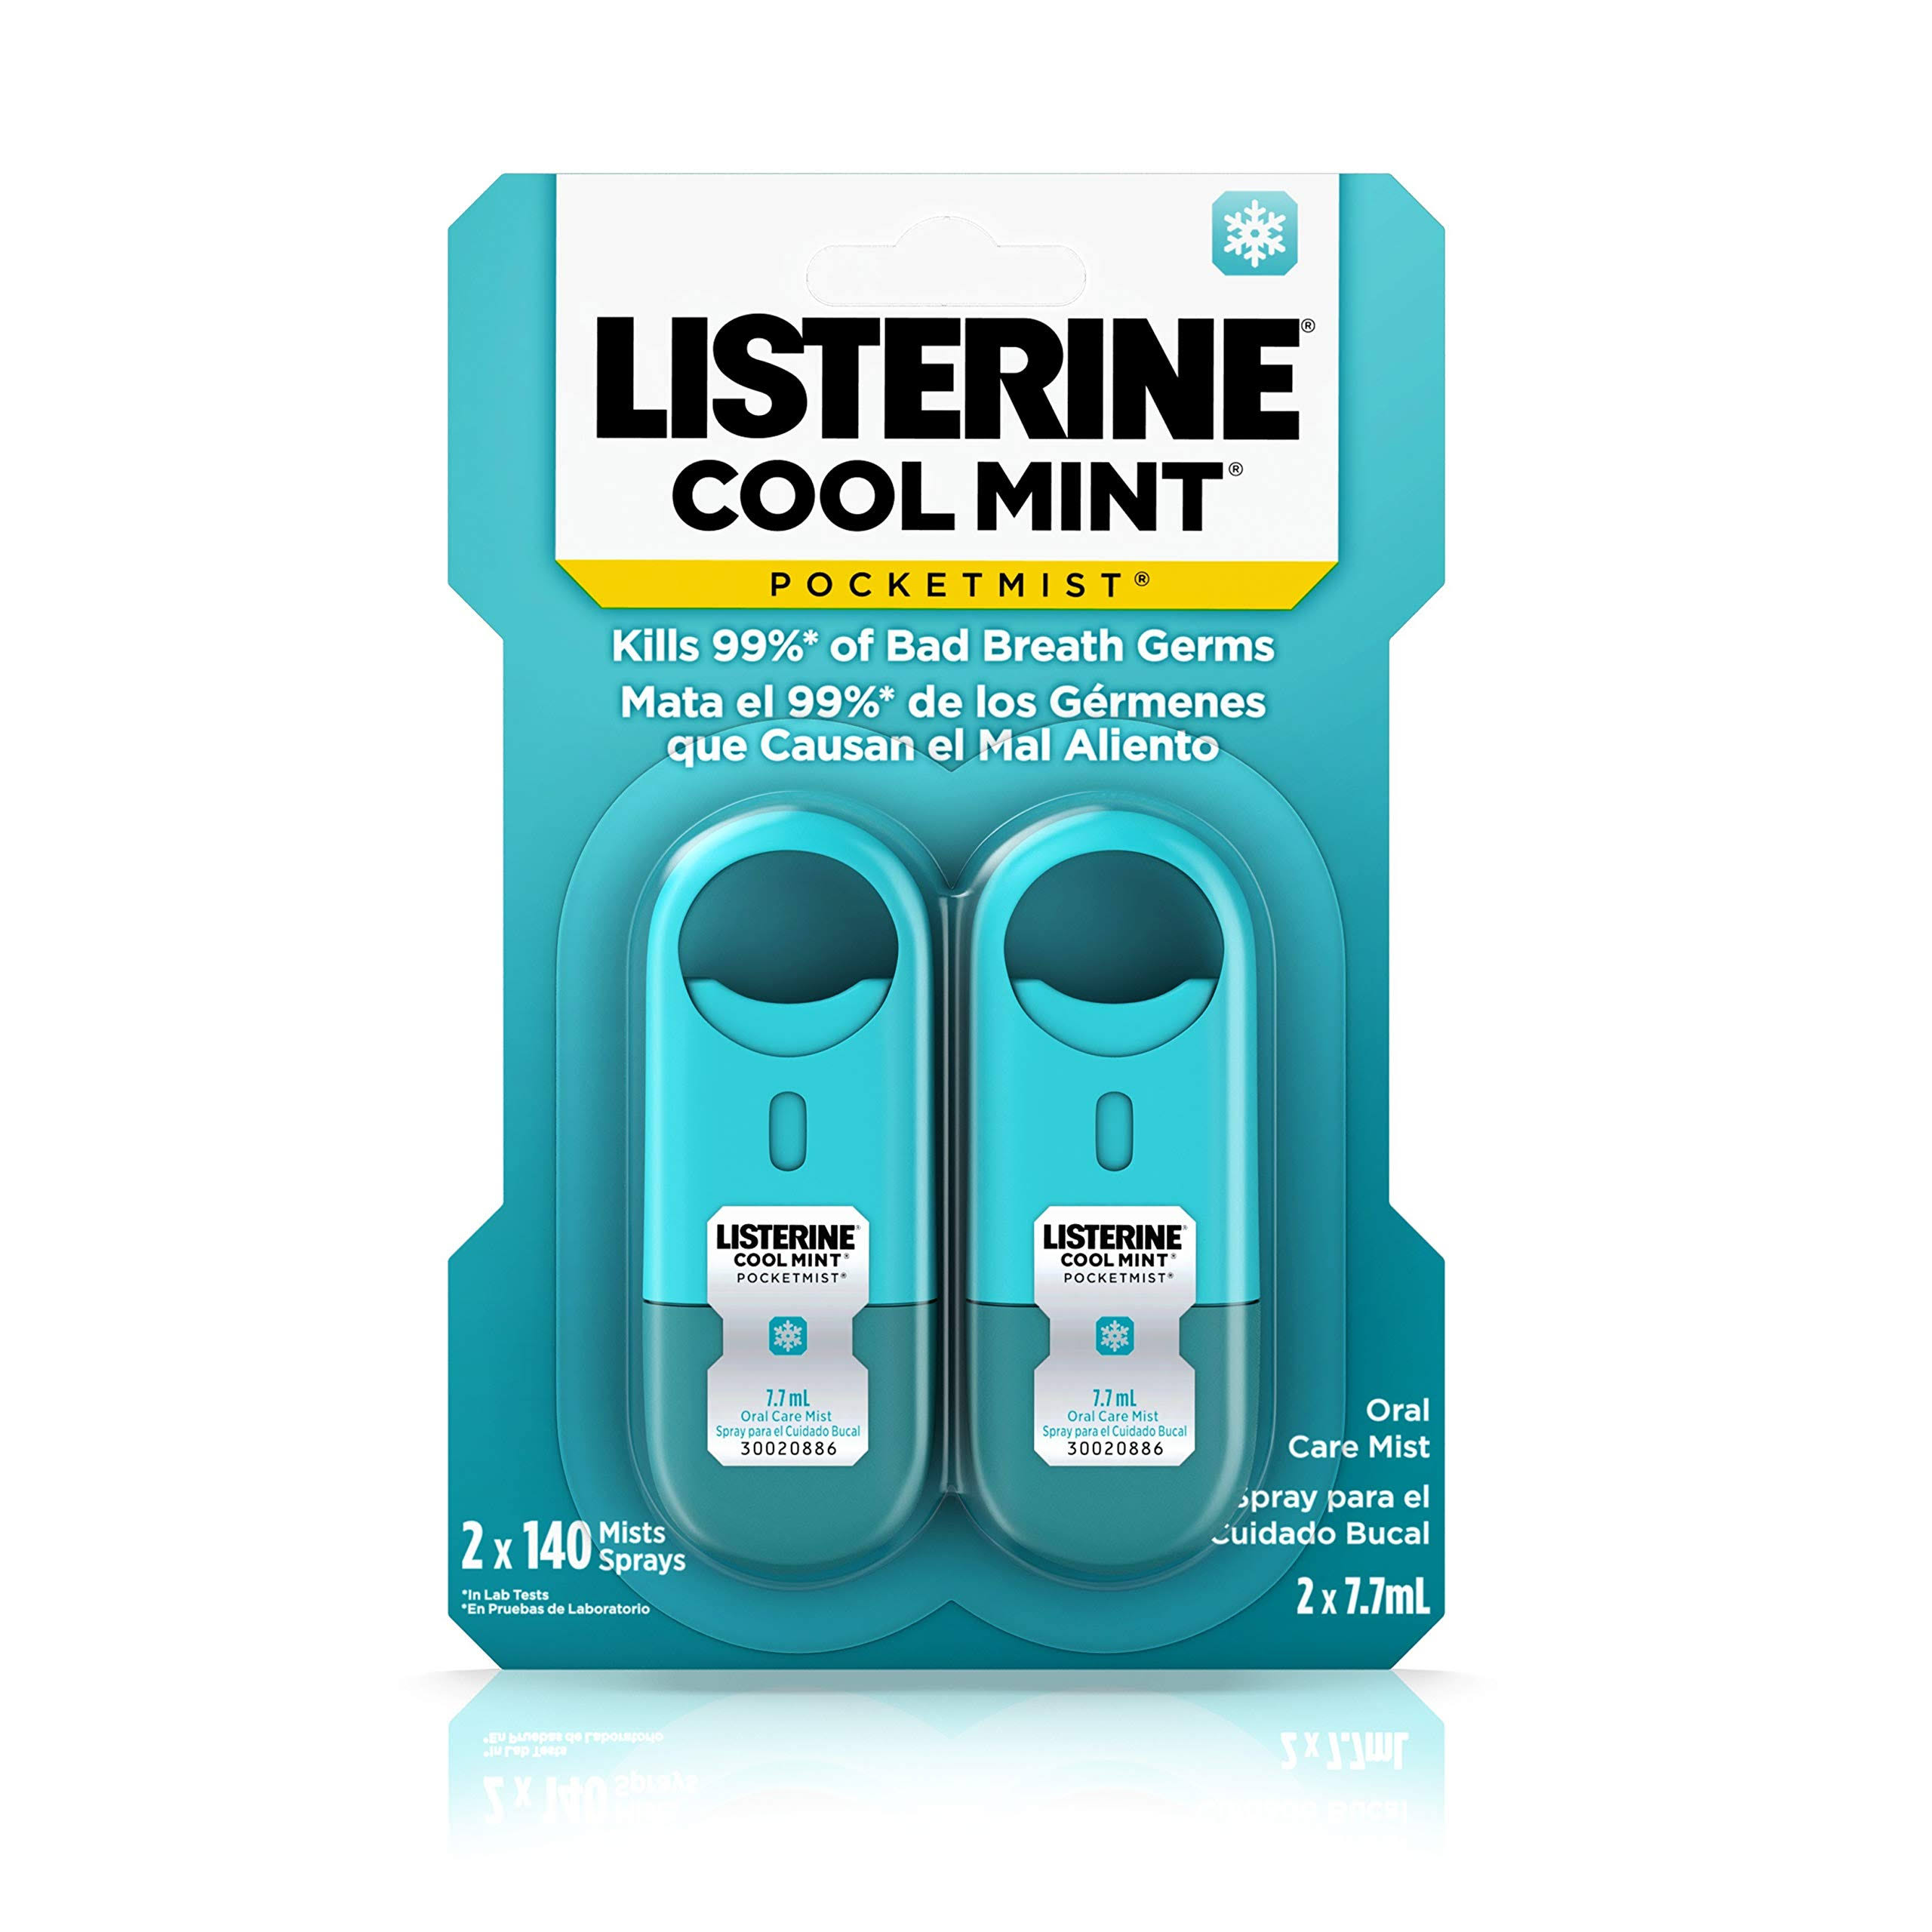 Listerine Pocketmist Cool Mint Oral Care Mist Spray - 2ct, 7.7ml